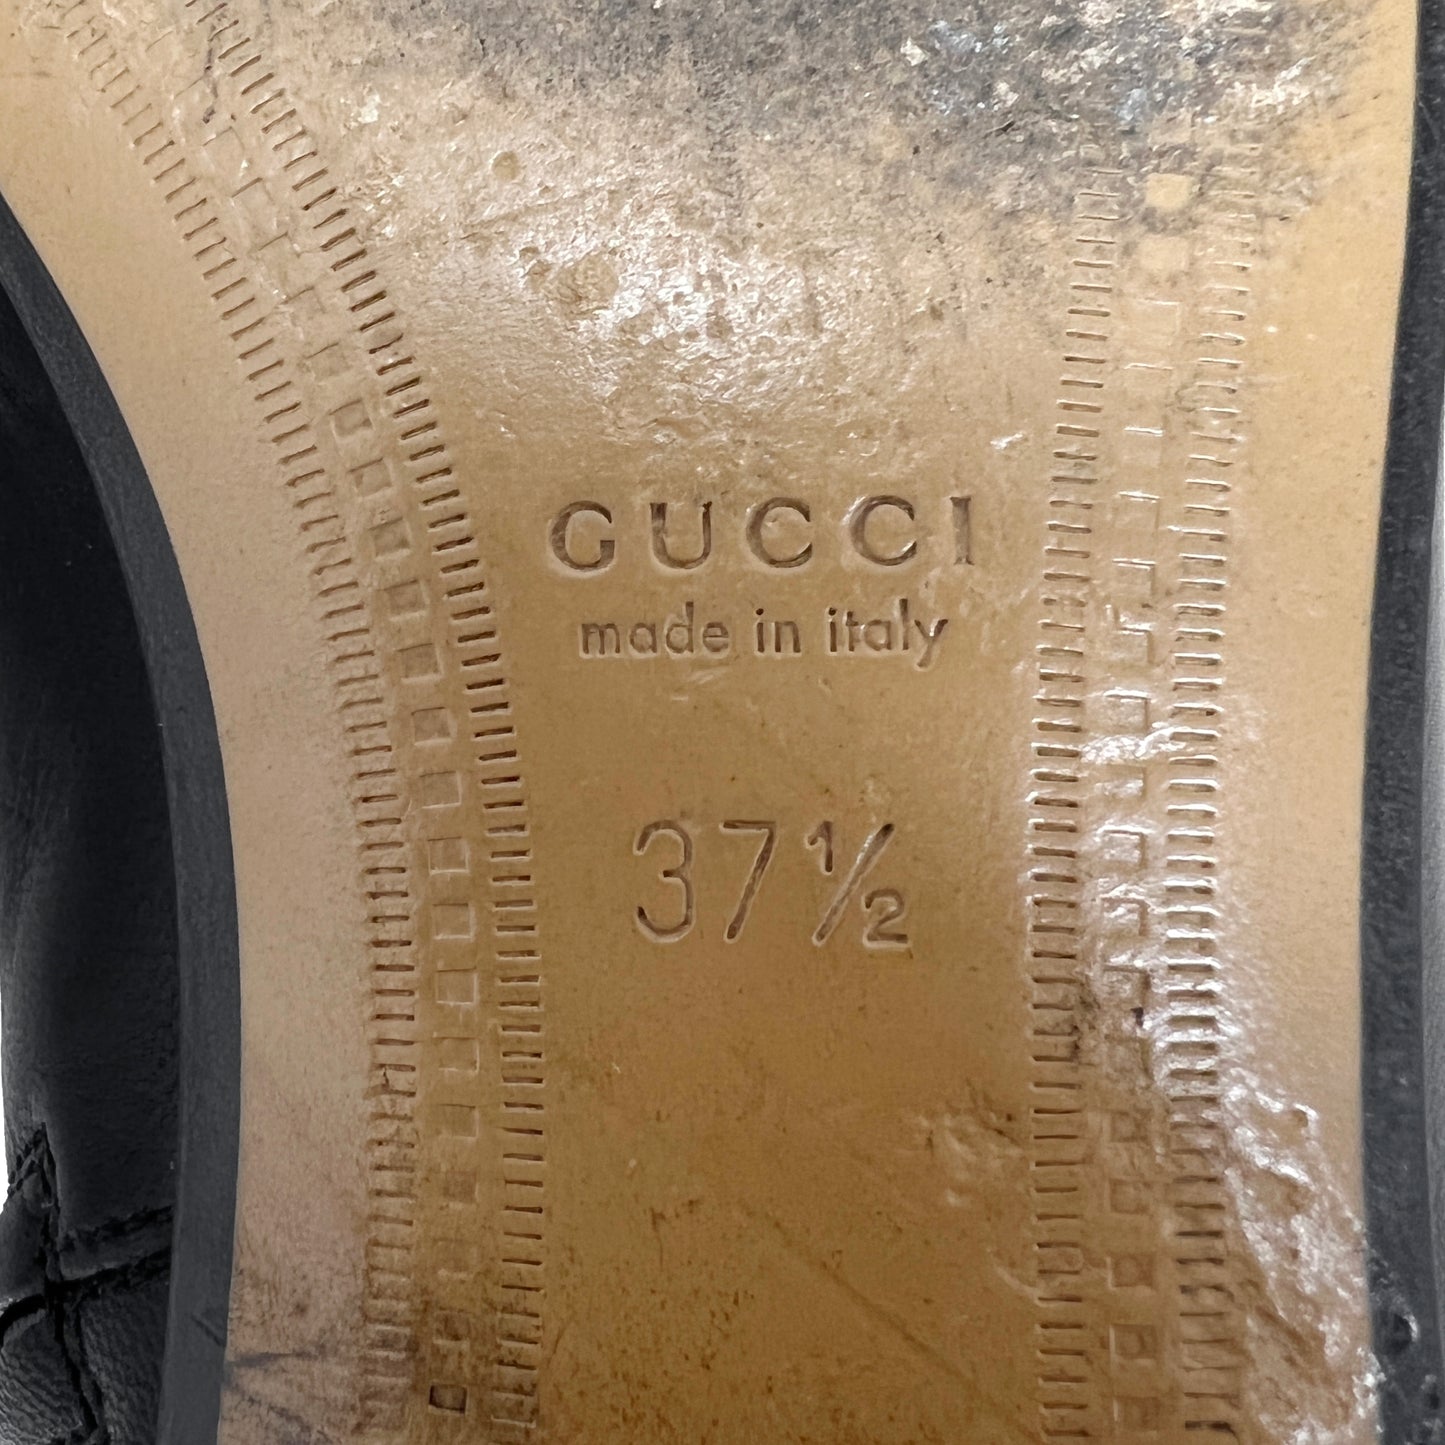 Gucci Jordaan Horsebit Black Leather Round Toe Zip Up Flat Ankle Boots Size EU 37.5